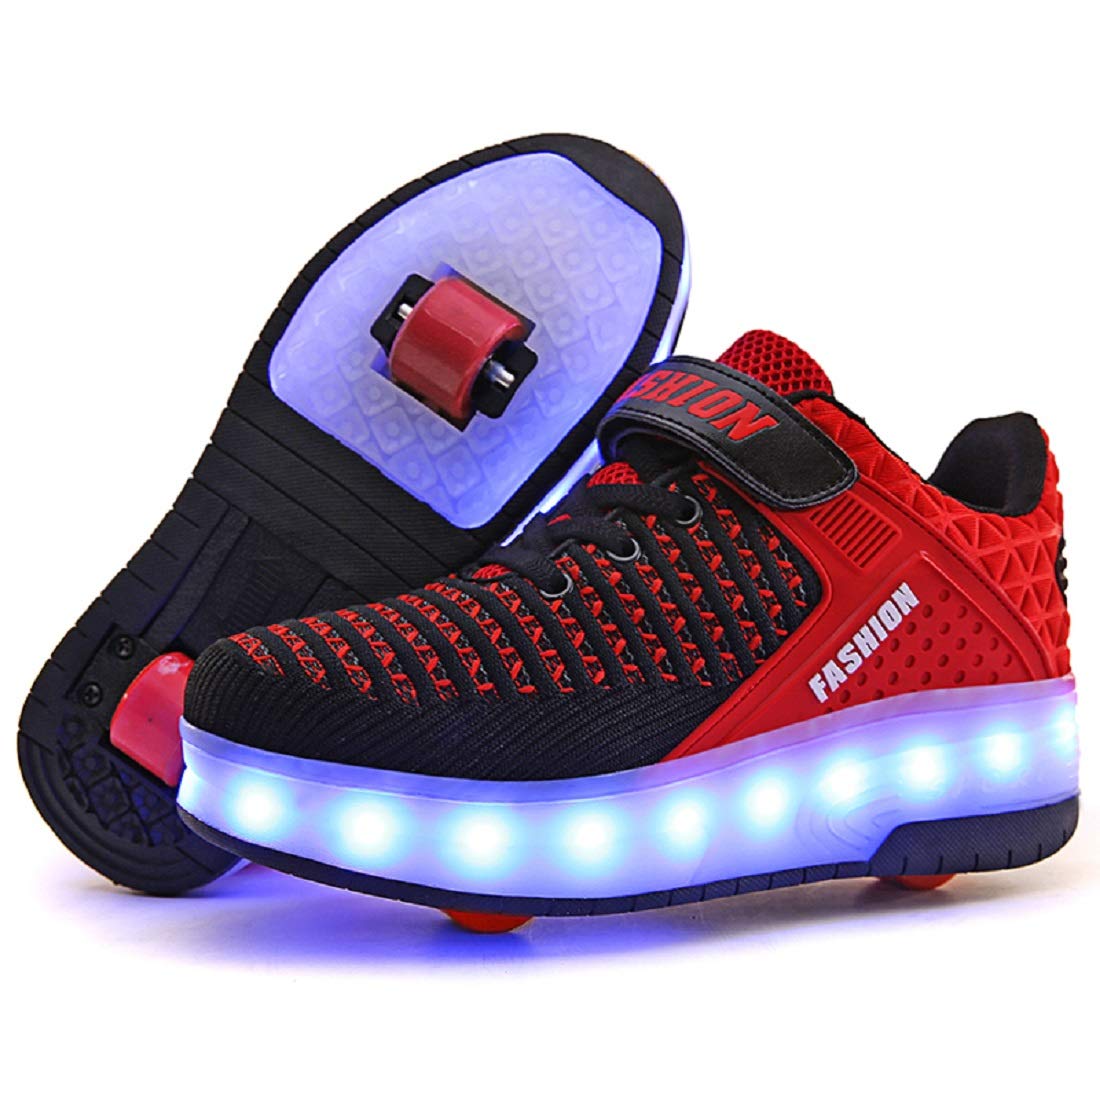 VMATE LED Light up Roller Skate Shoes Blink Single Wheel Fashion Sports Flashing Sneaker Boys Girls Kid 